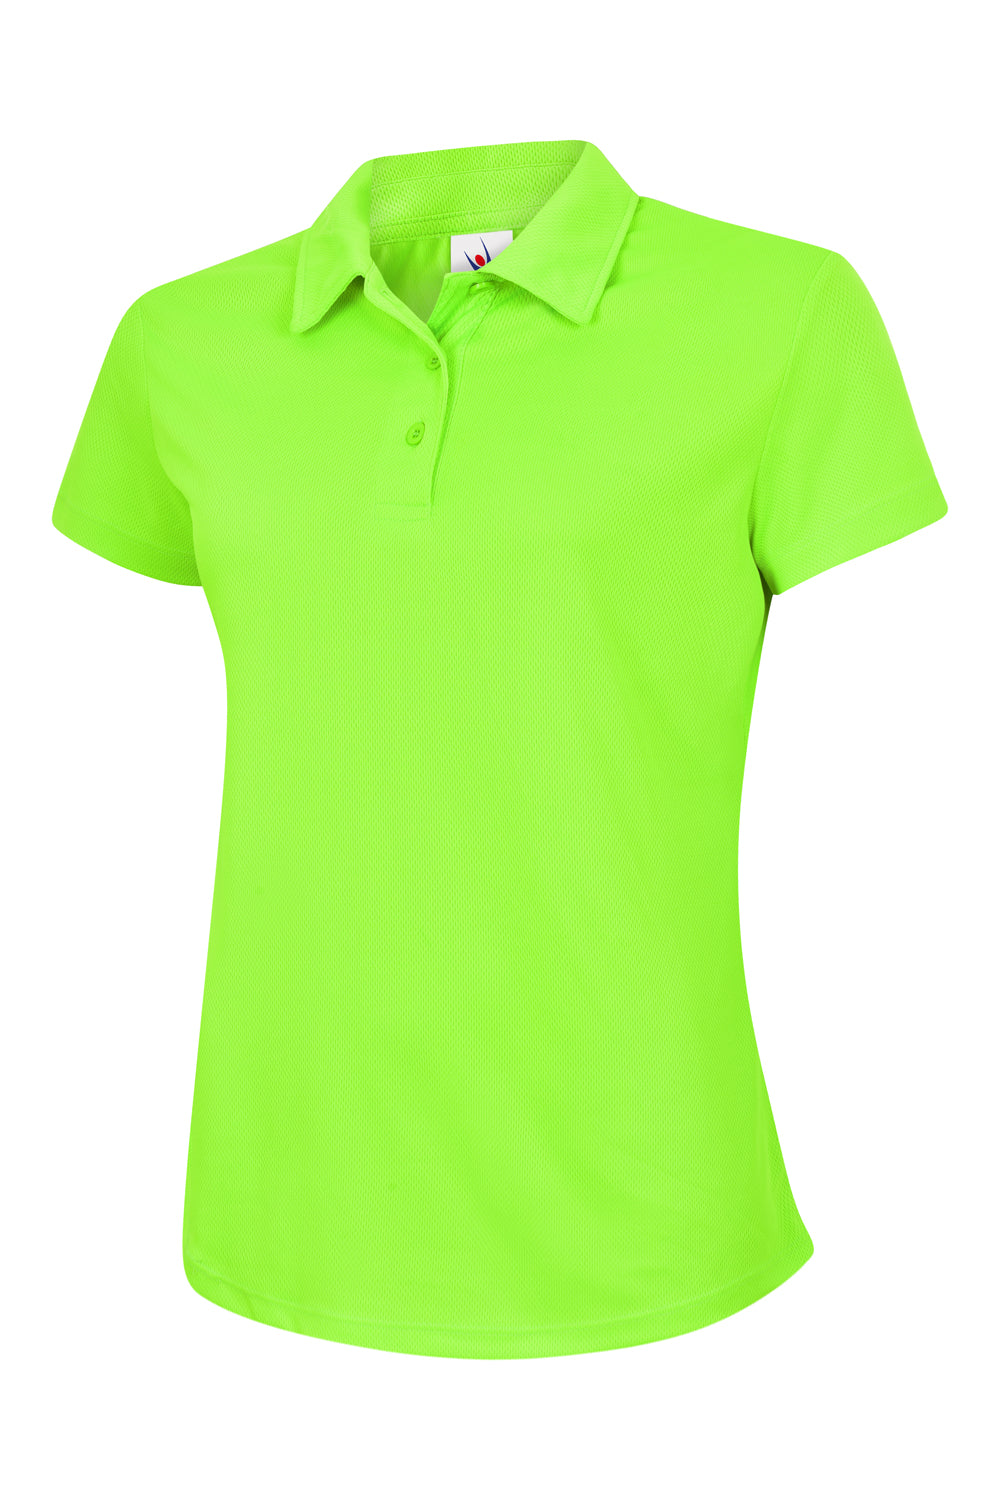 Uneek Ladies Ultra Cool Poloshirt UC126 - Electric Green